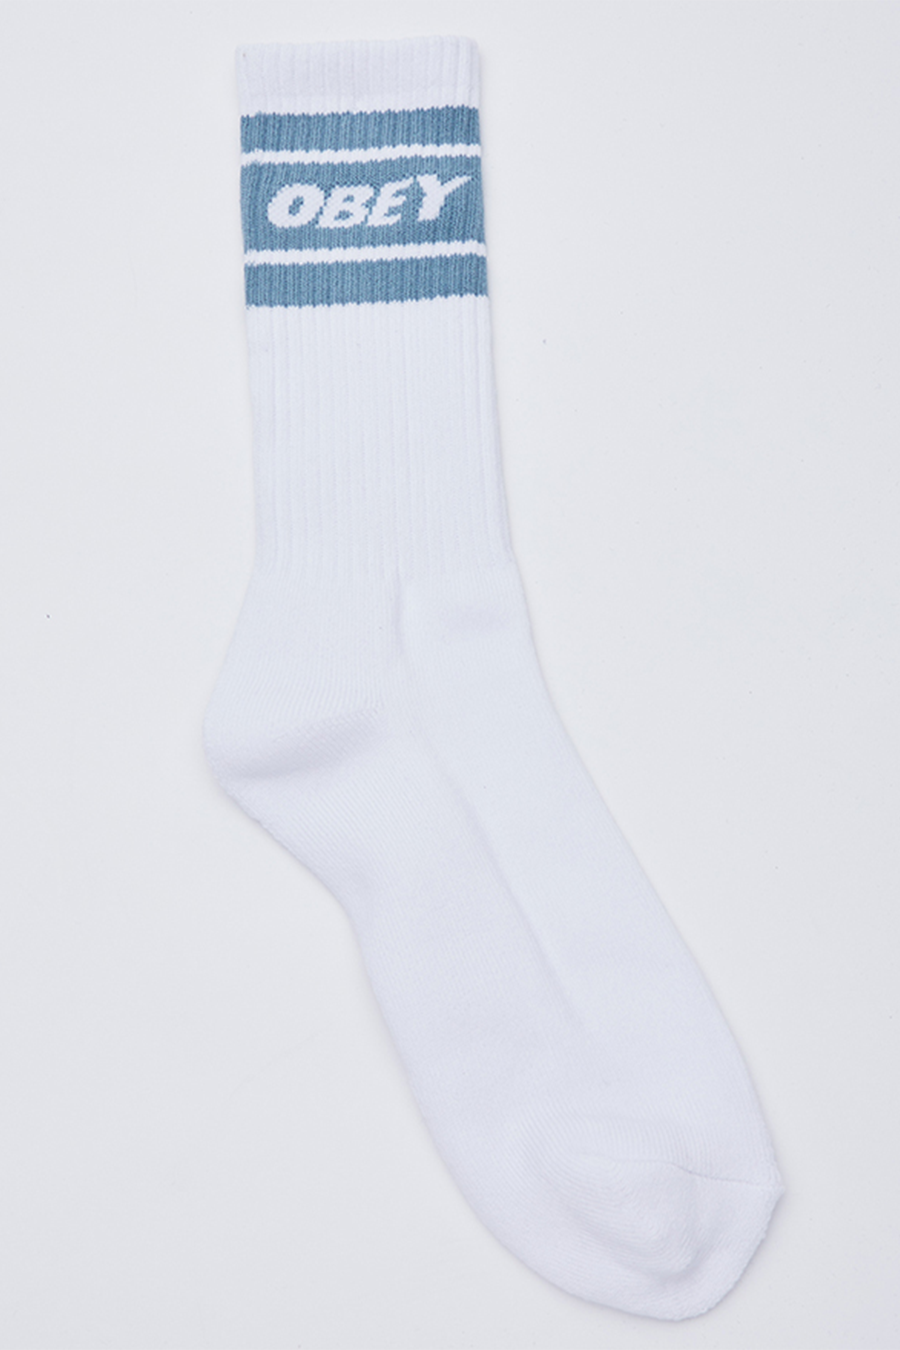 Cooper II Socks | White / Good Grey - Main Image Number 1 of 1